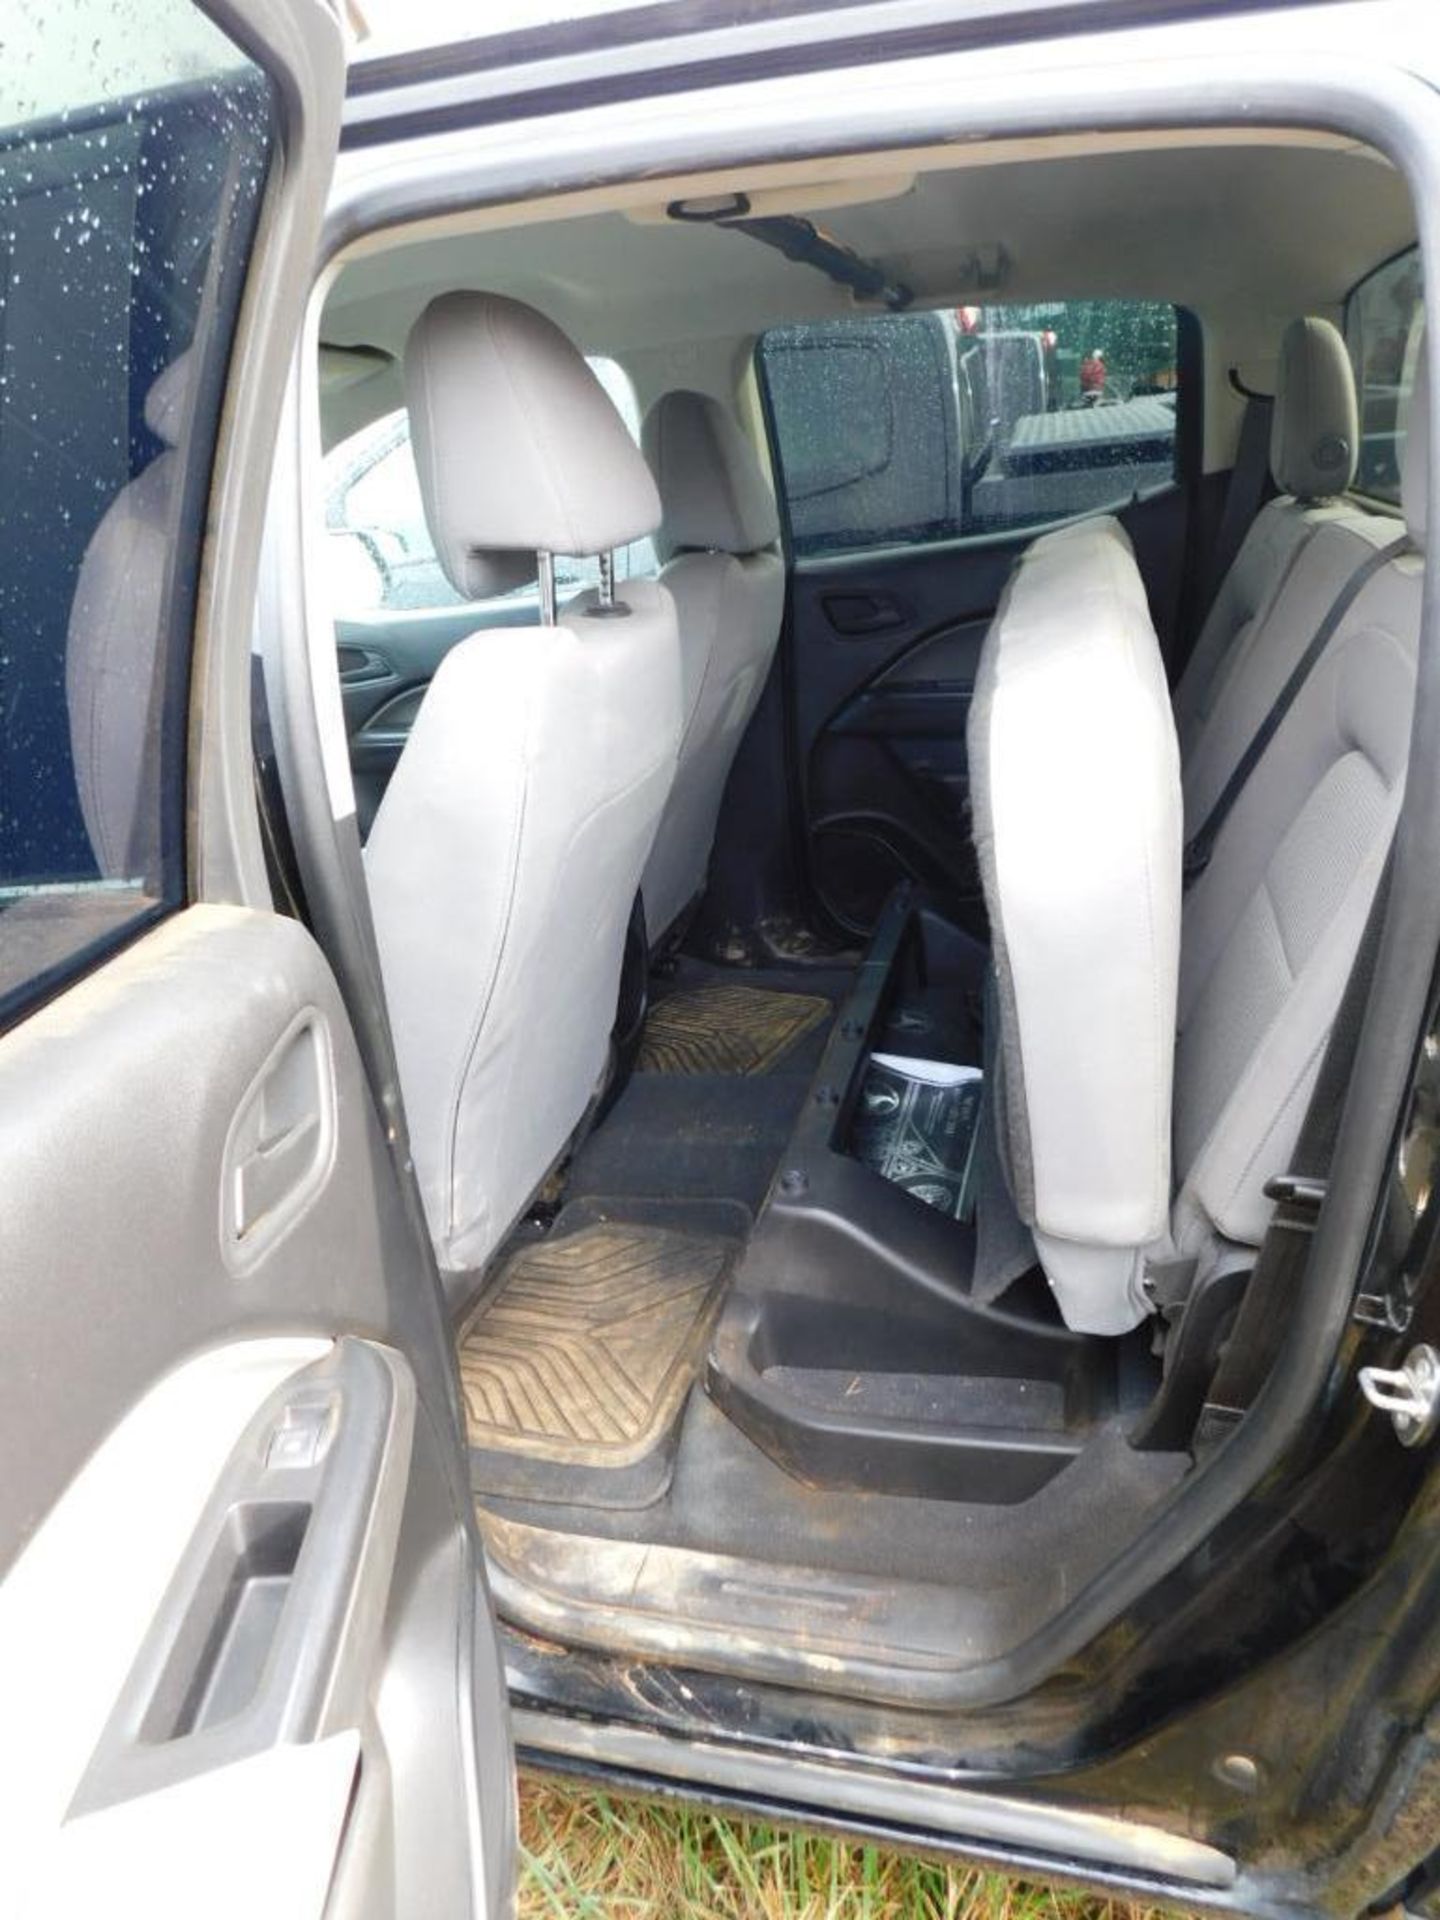 2019 Chevy Colorado Crew Cab, 4-Wheel Drive, 3.6 Liter, V6, Gasoline Motor, Auto, 5' Bed, 87,741 Mil - Image 11 of 11